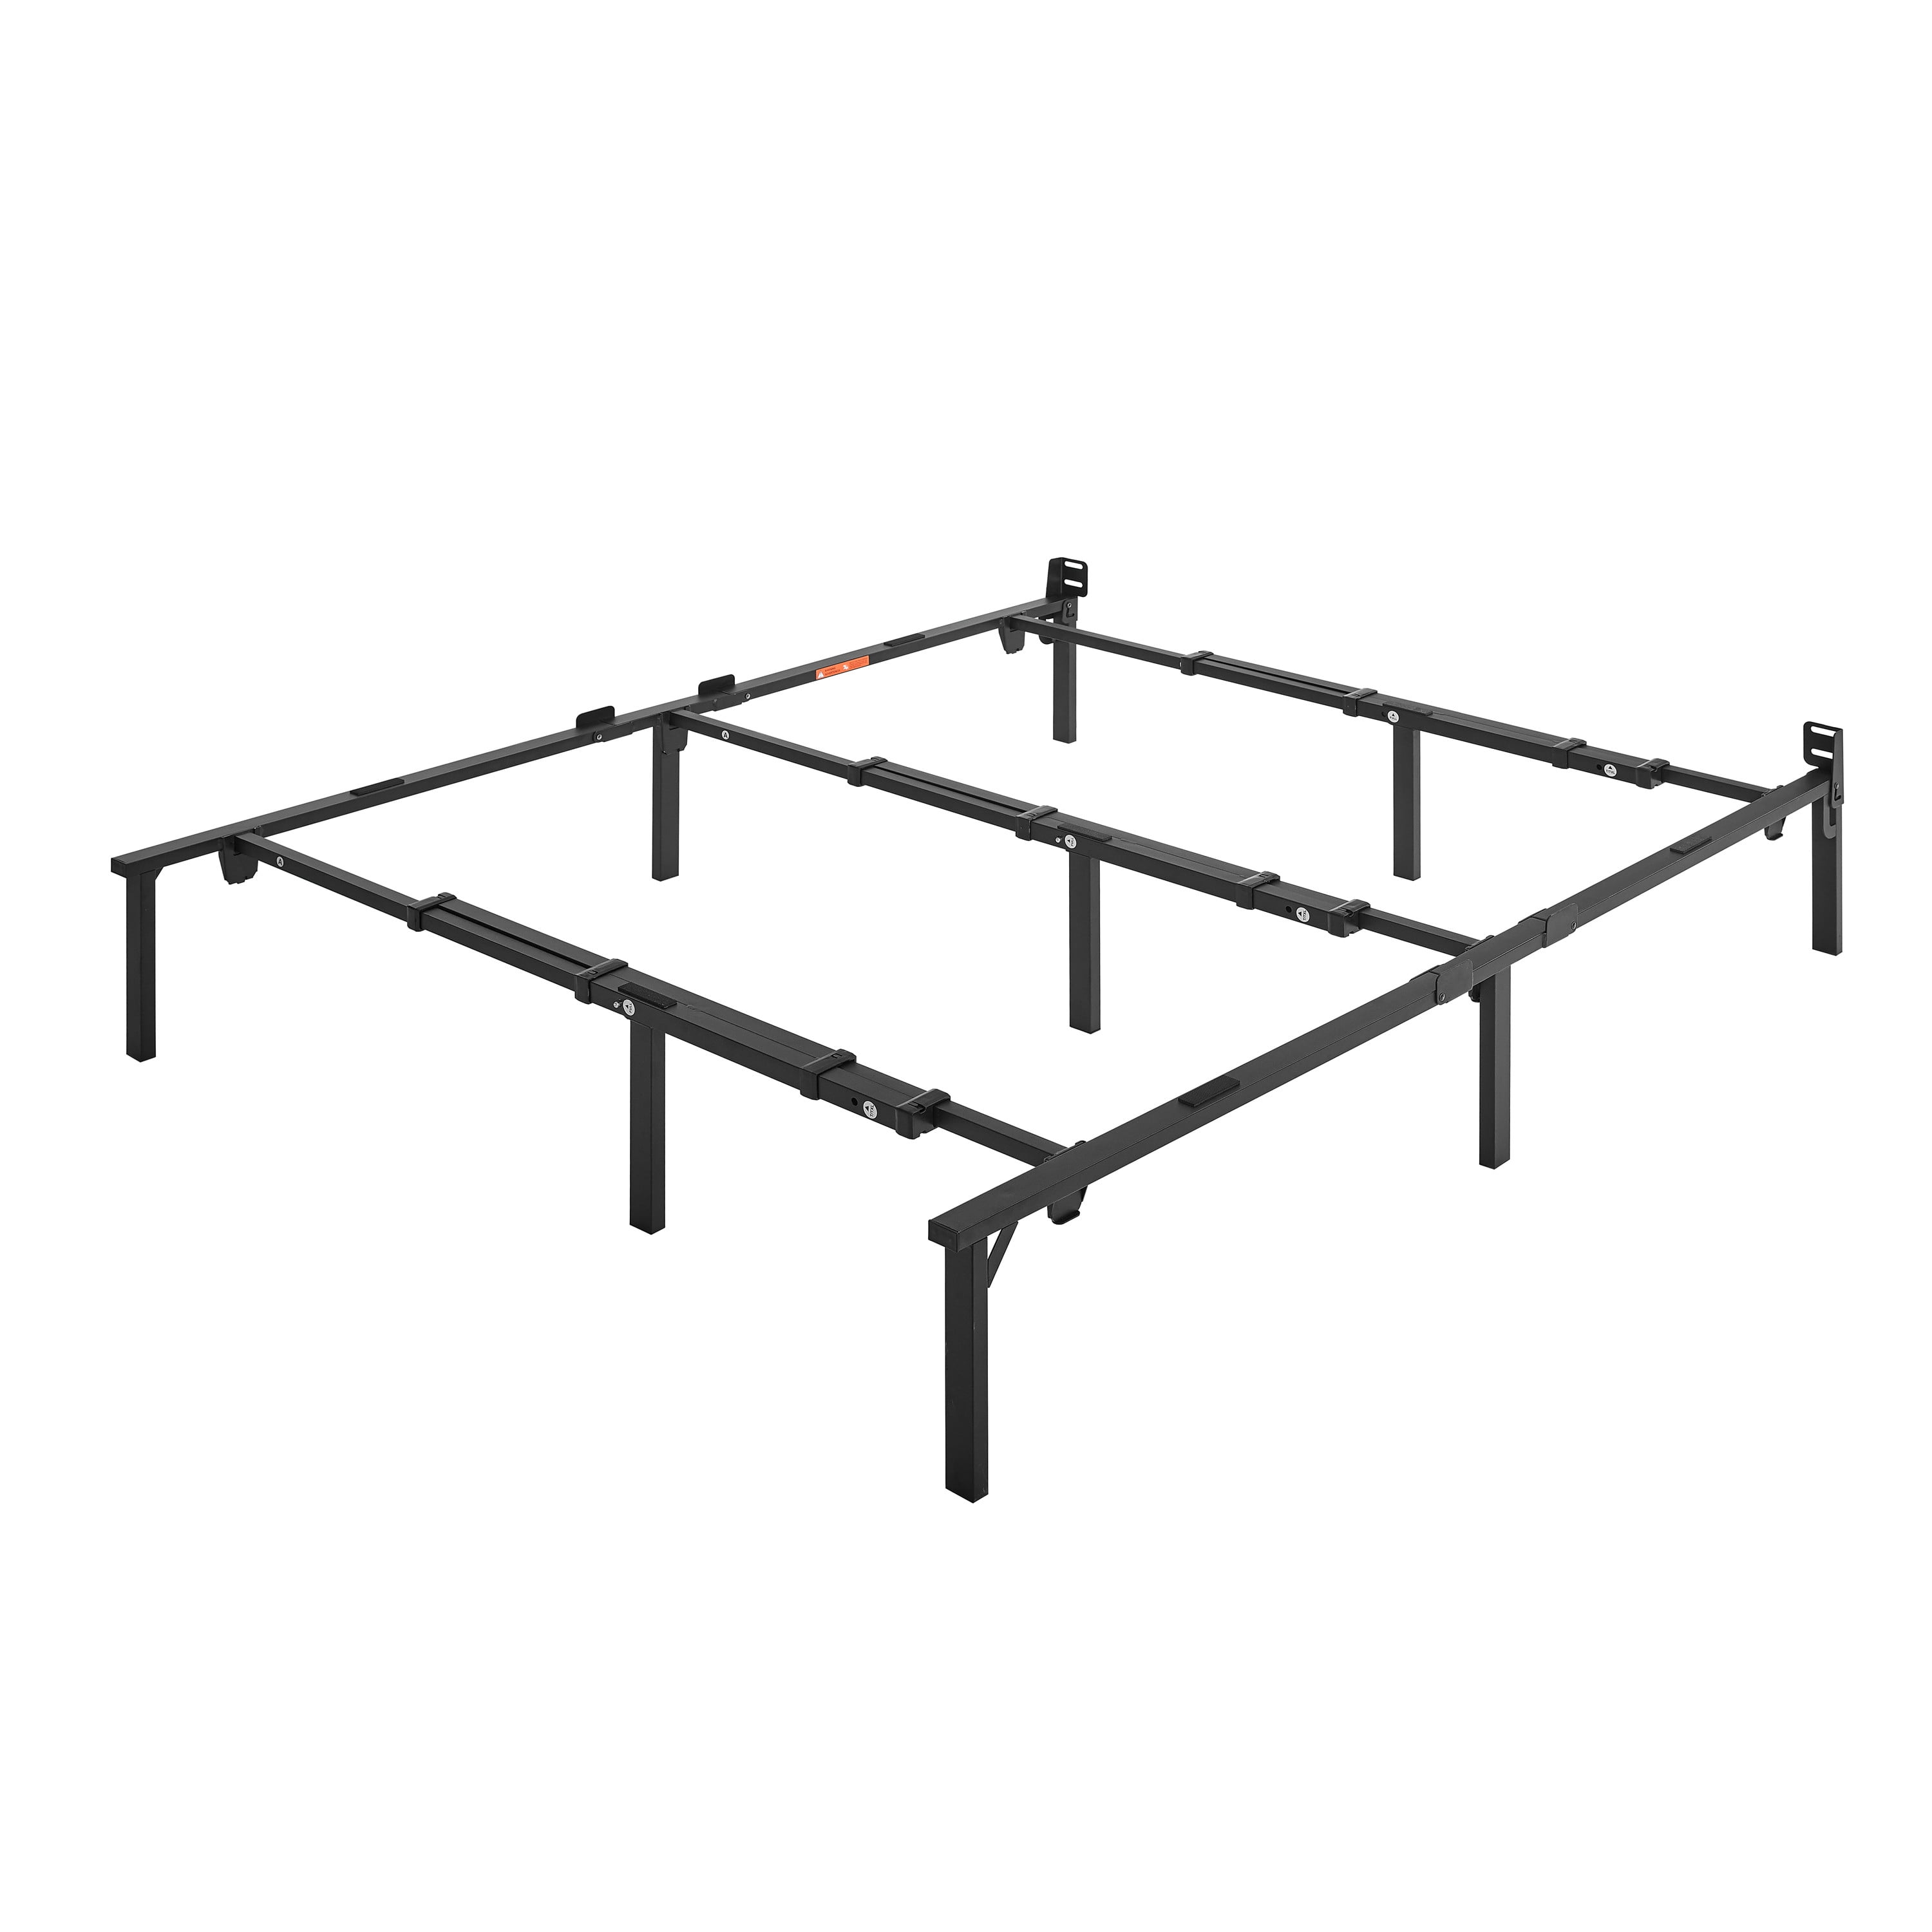 Mainstays 7 Adjustable Low Profile Bed Frame, Twin - King, Black Steel 